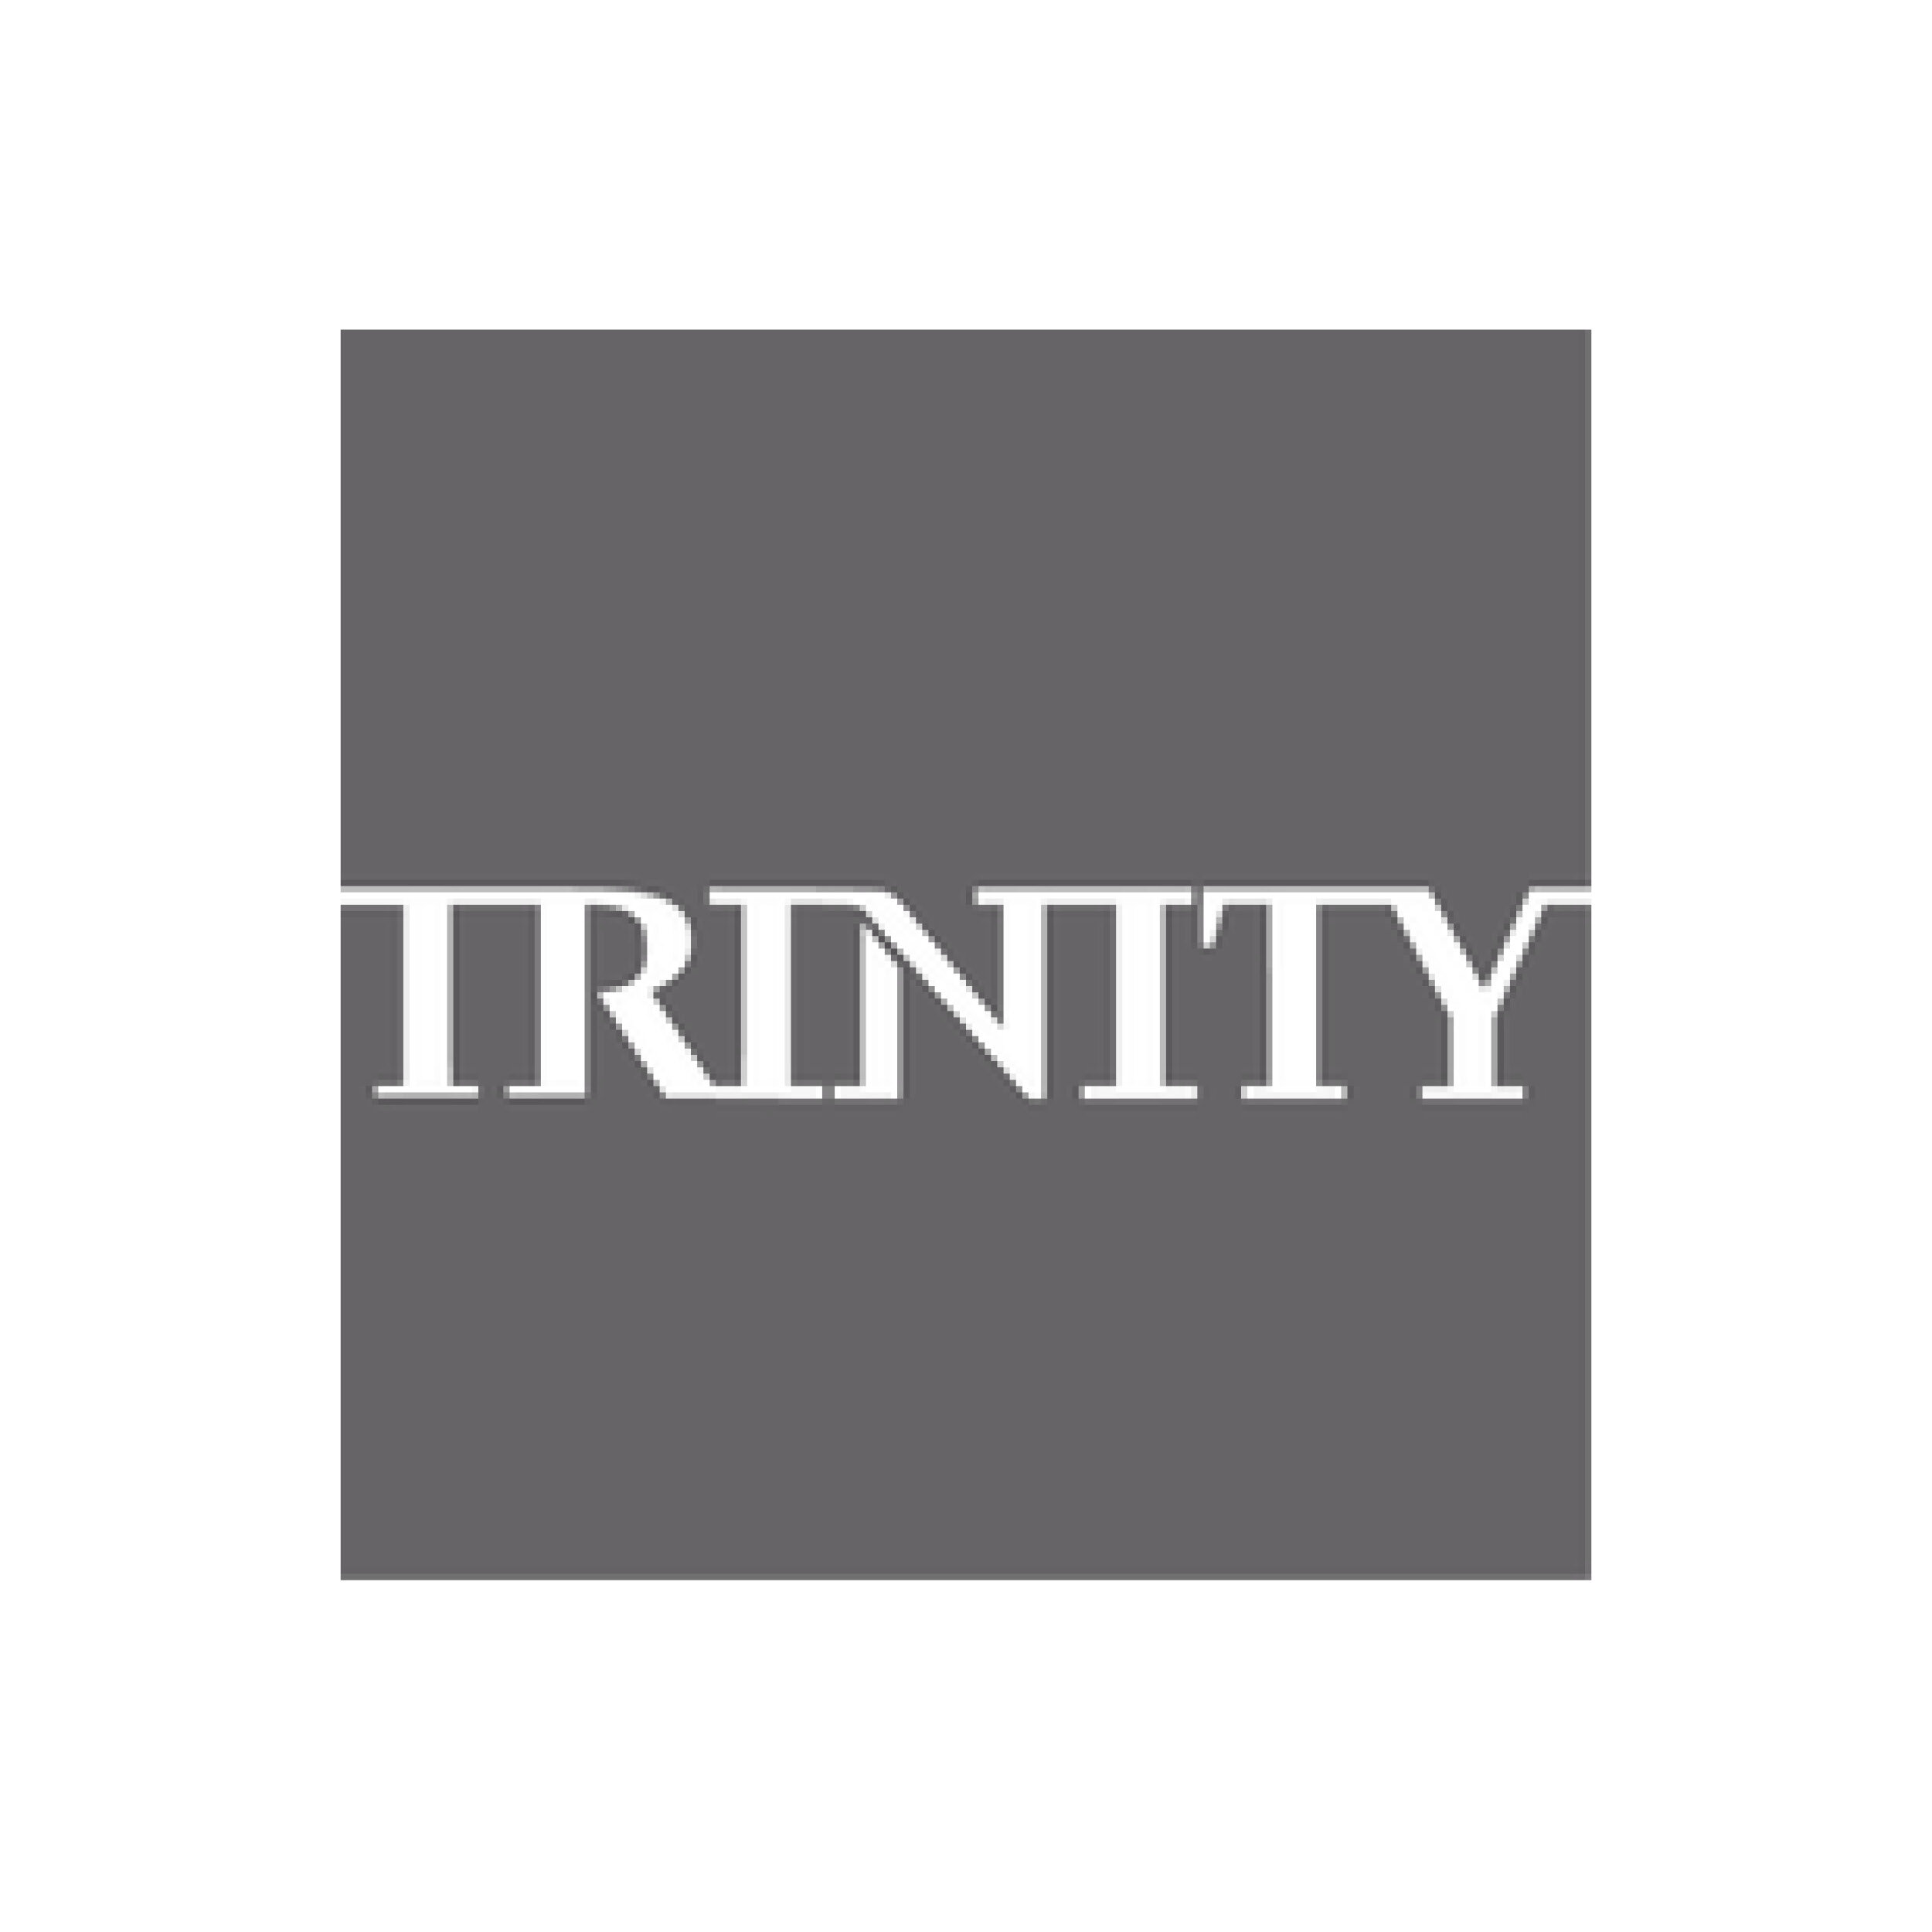 18 Trinity Group.jpg